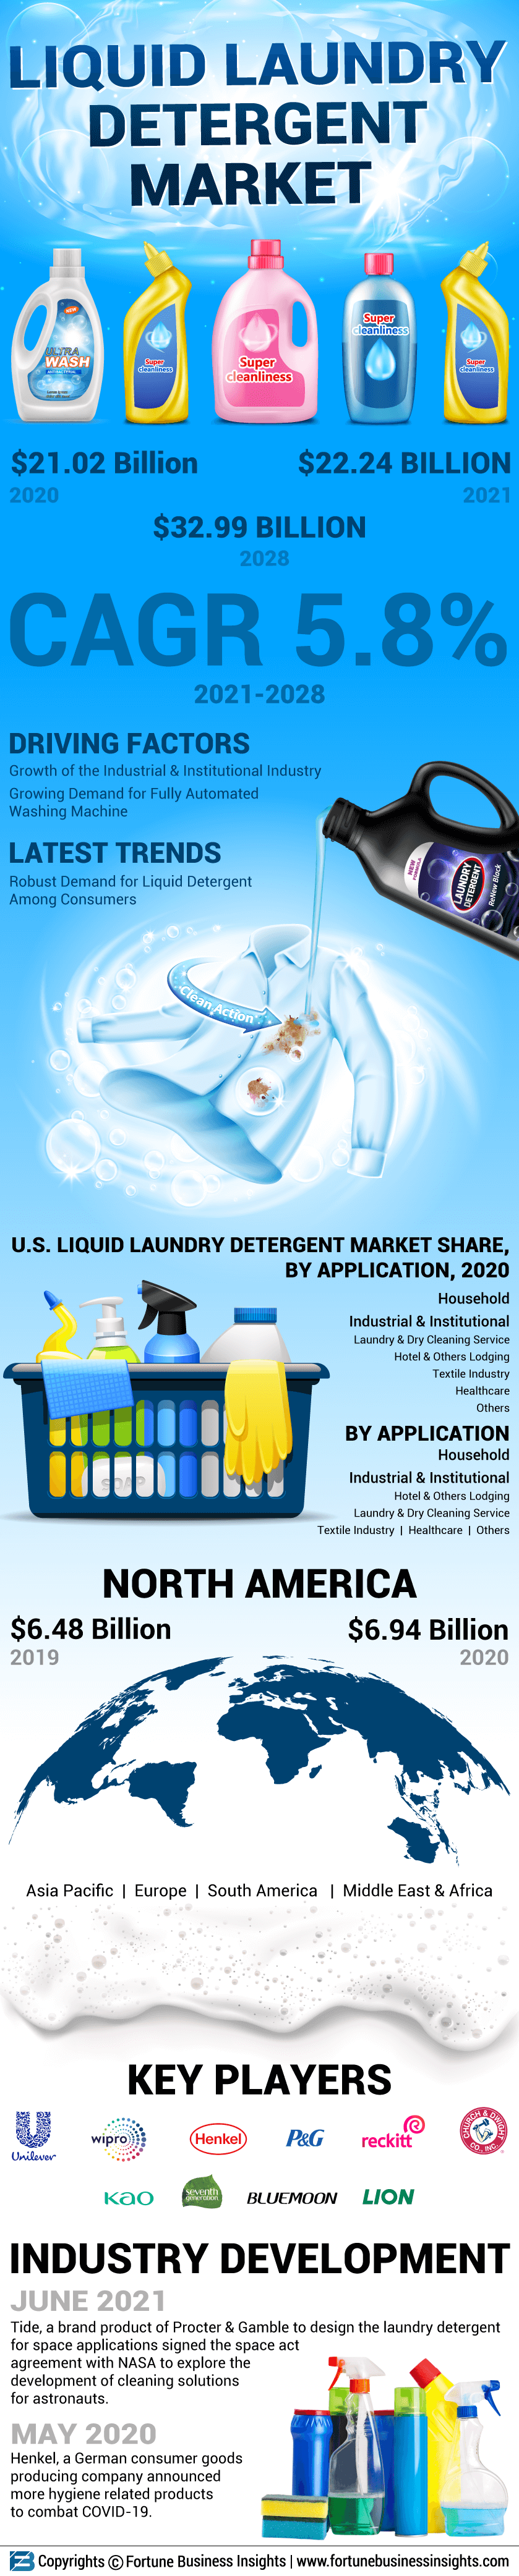 Liquid Laundry Detergent Market